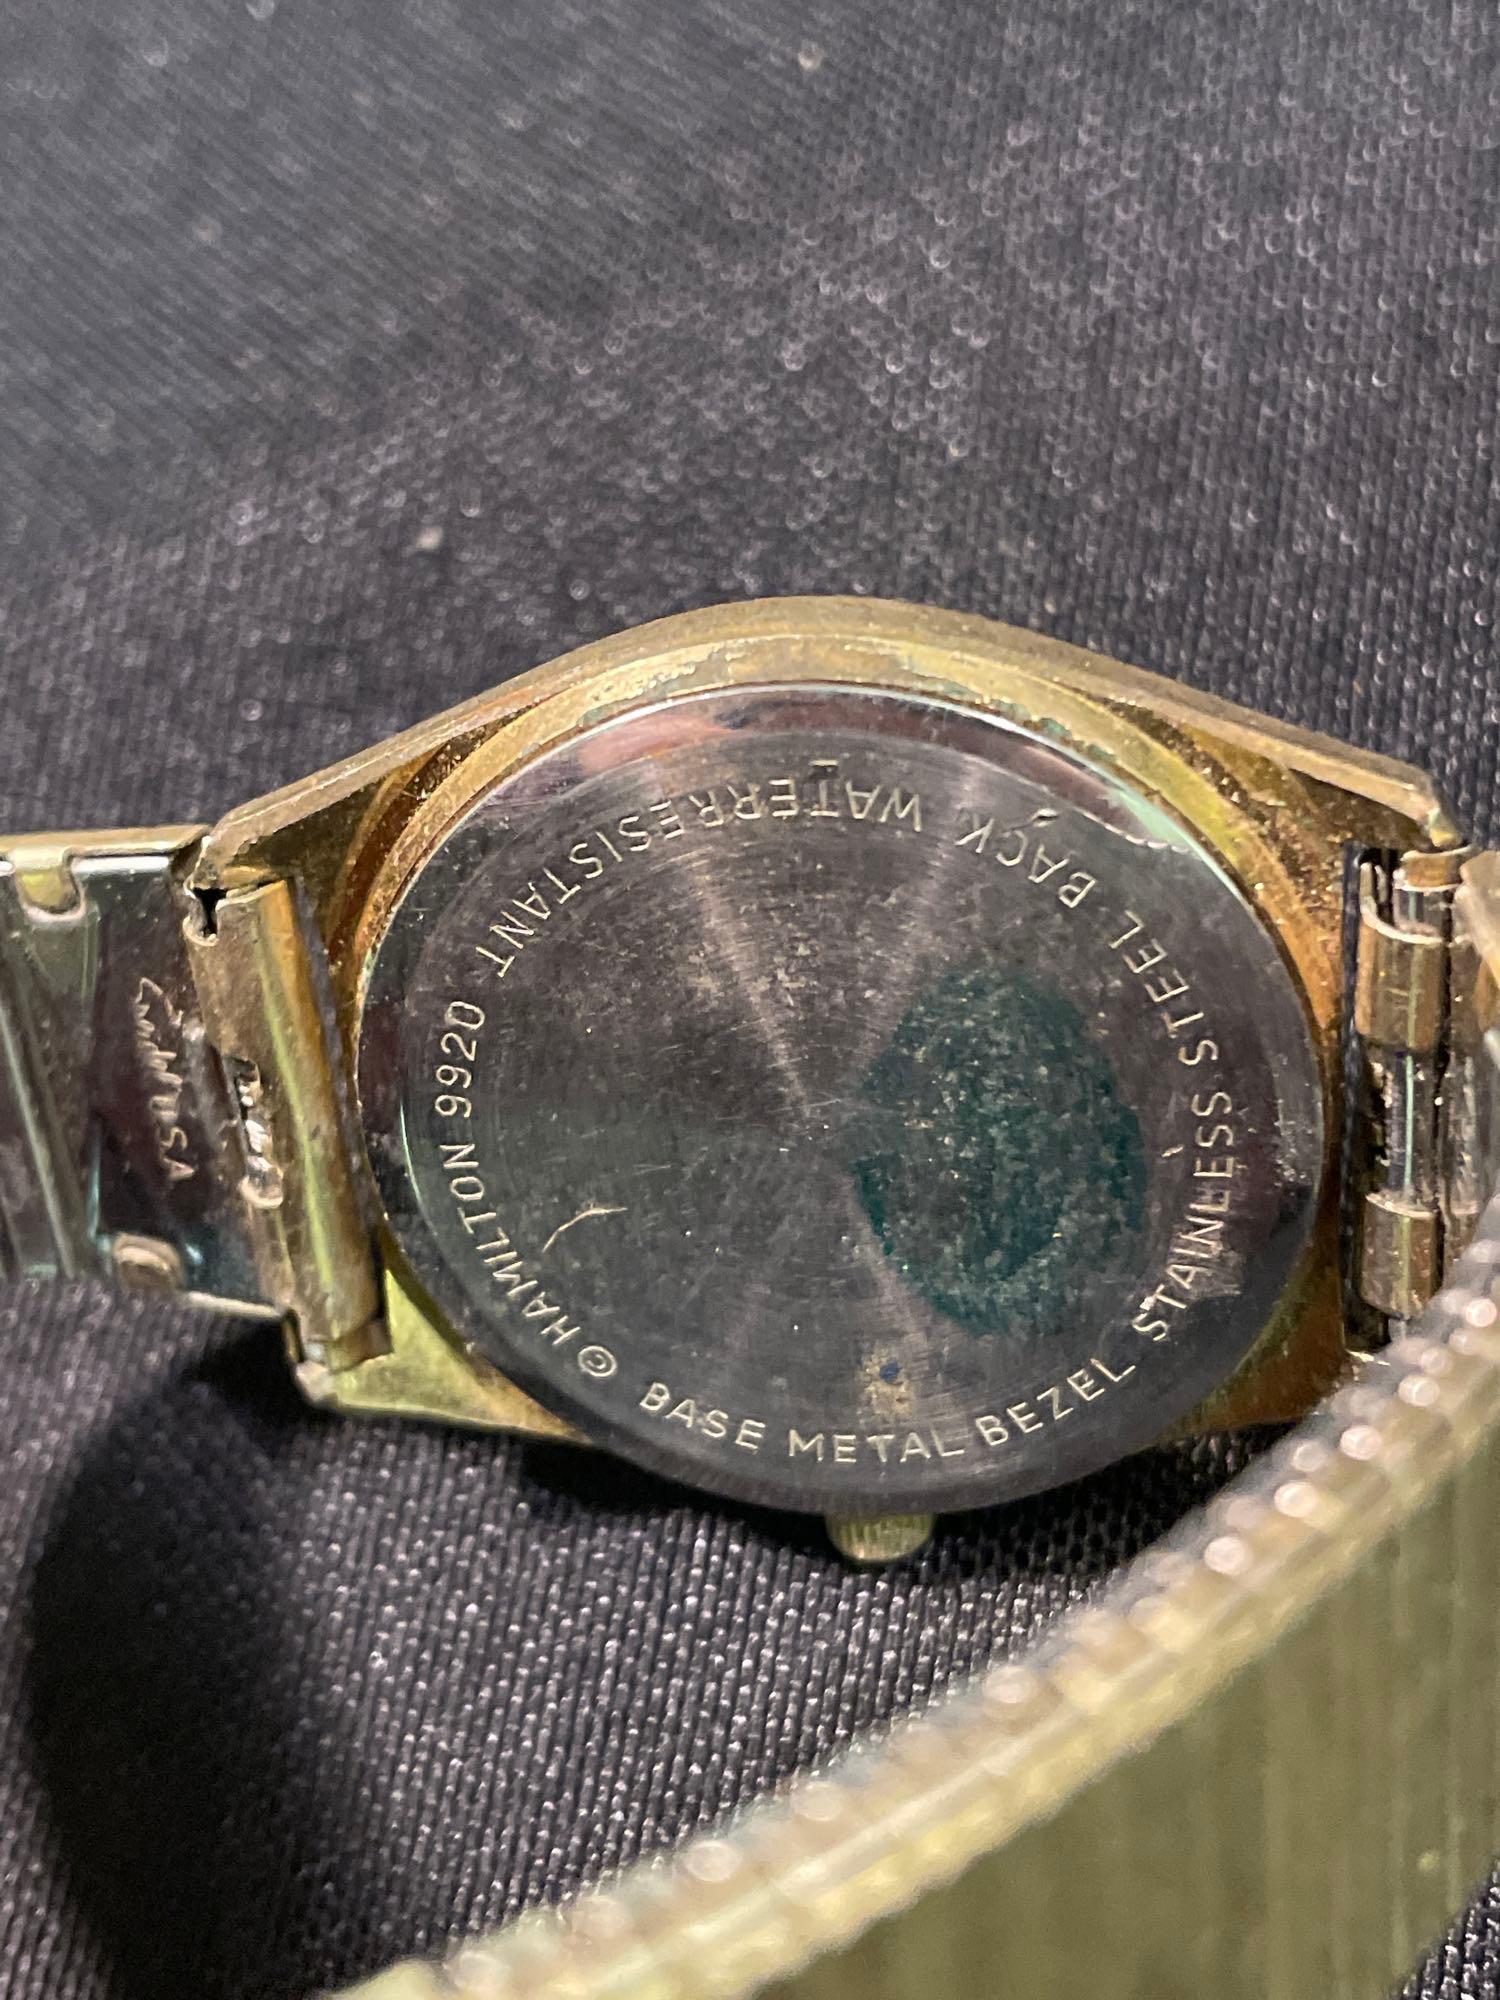 Alprosa & unknown wrist watch